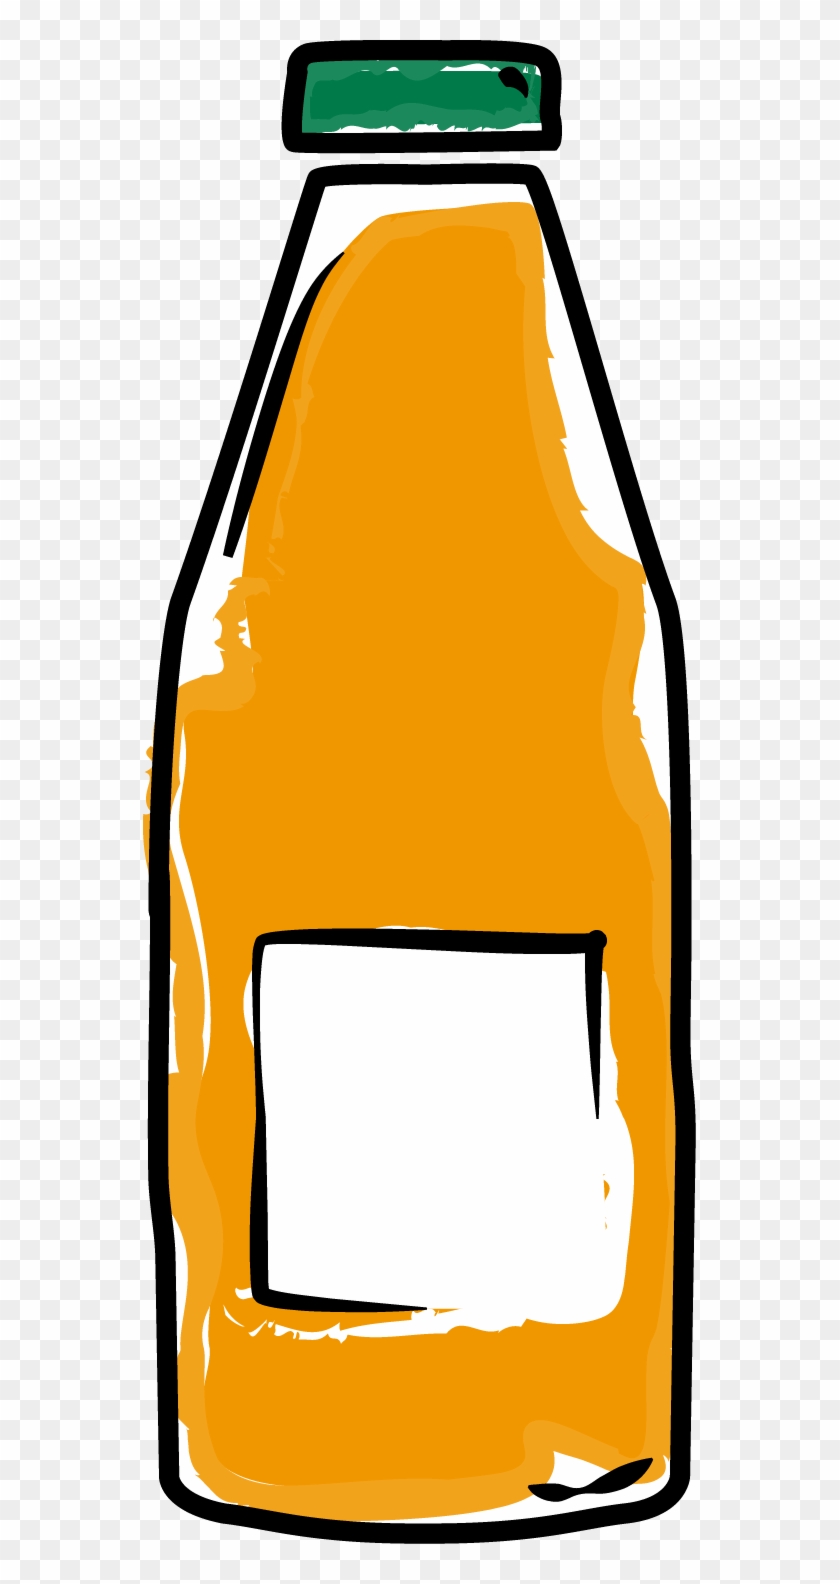 Orange Juice - Orange Juice Bottle Clipart #270091